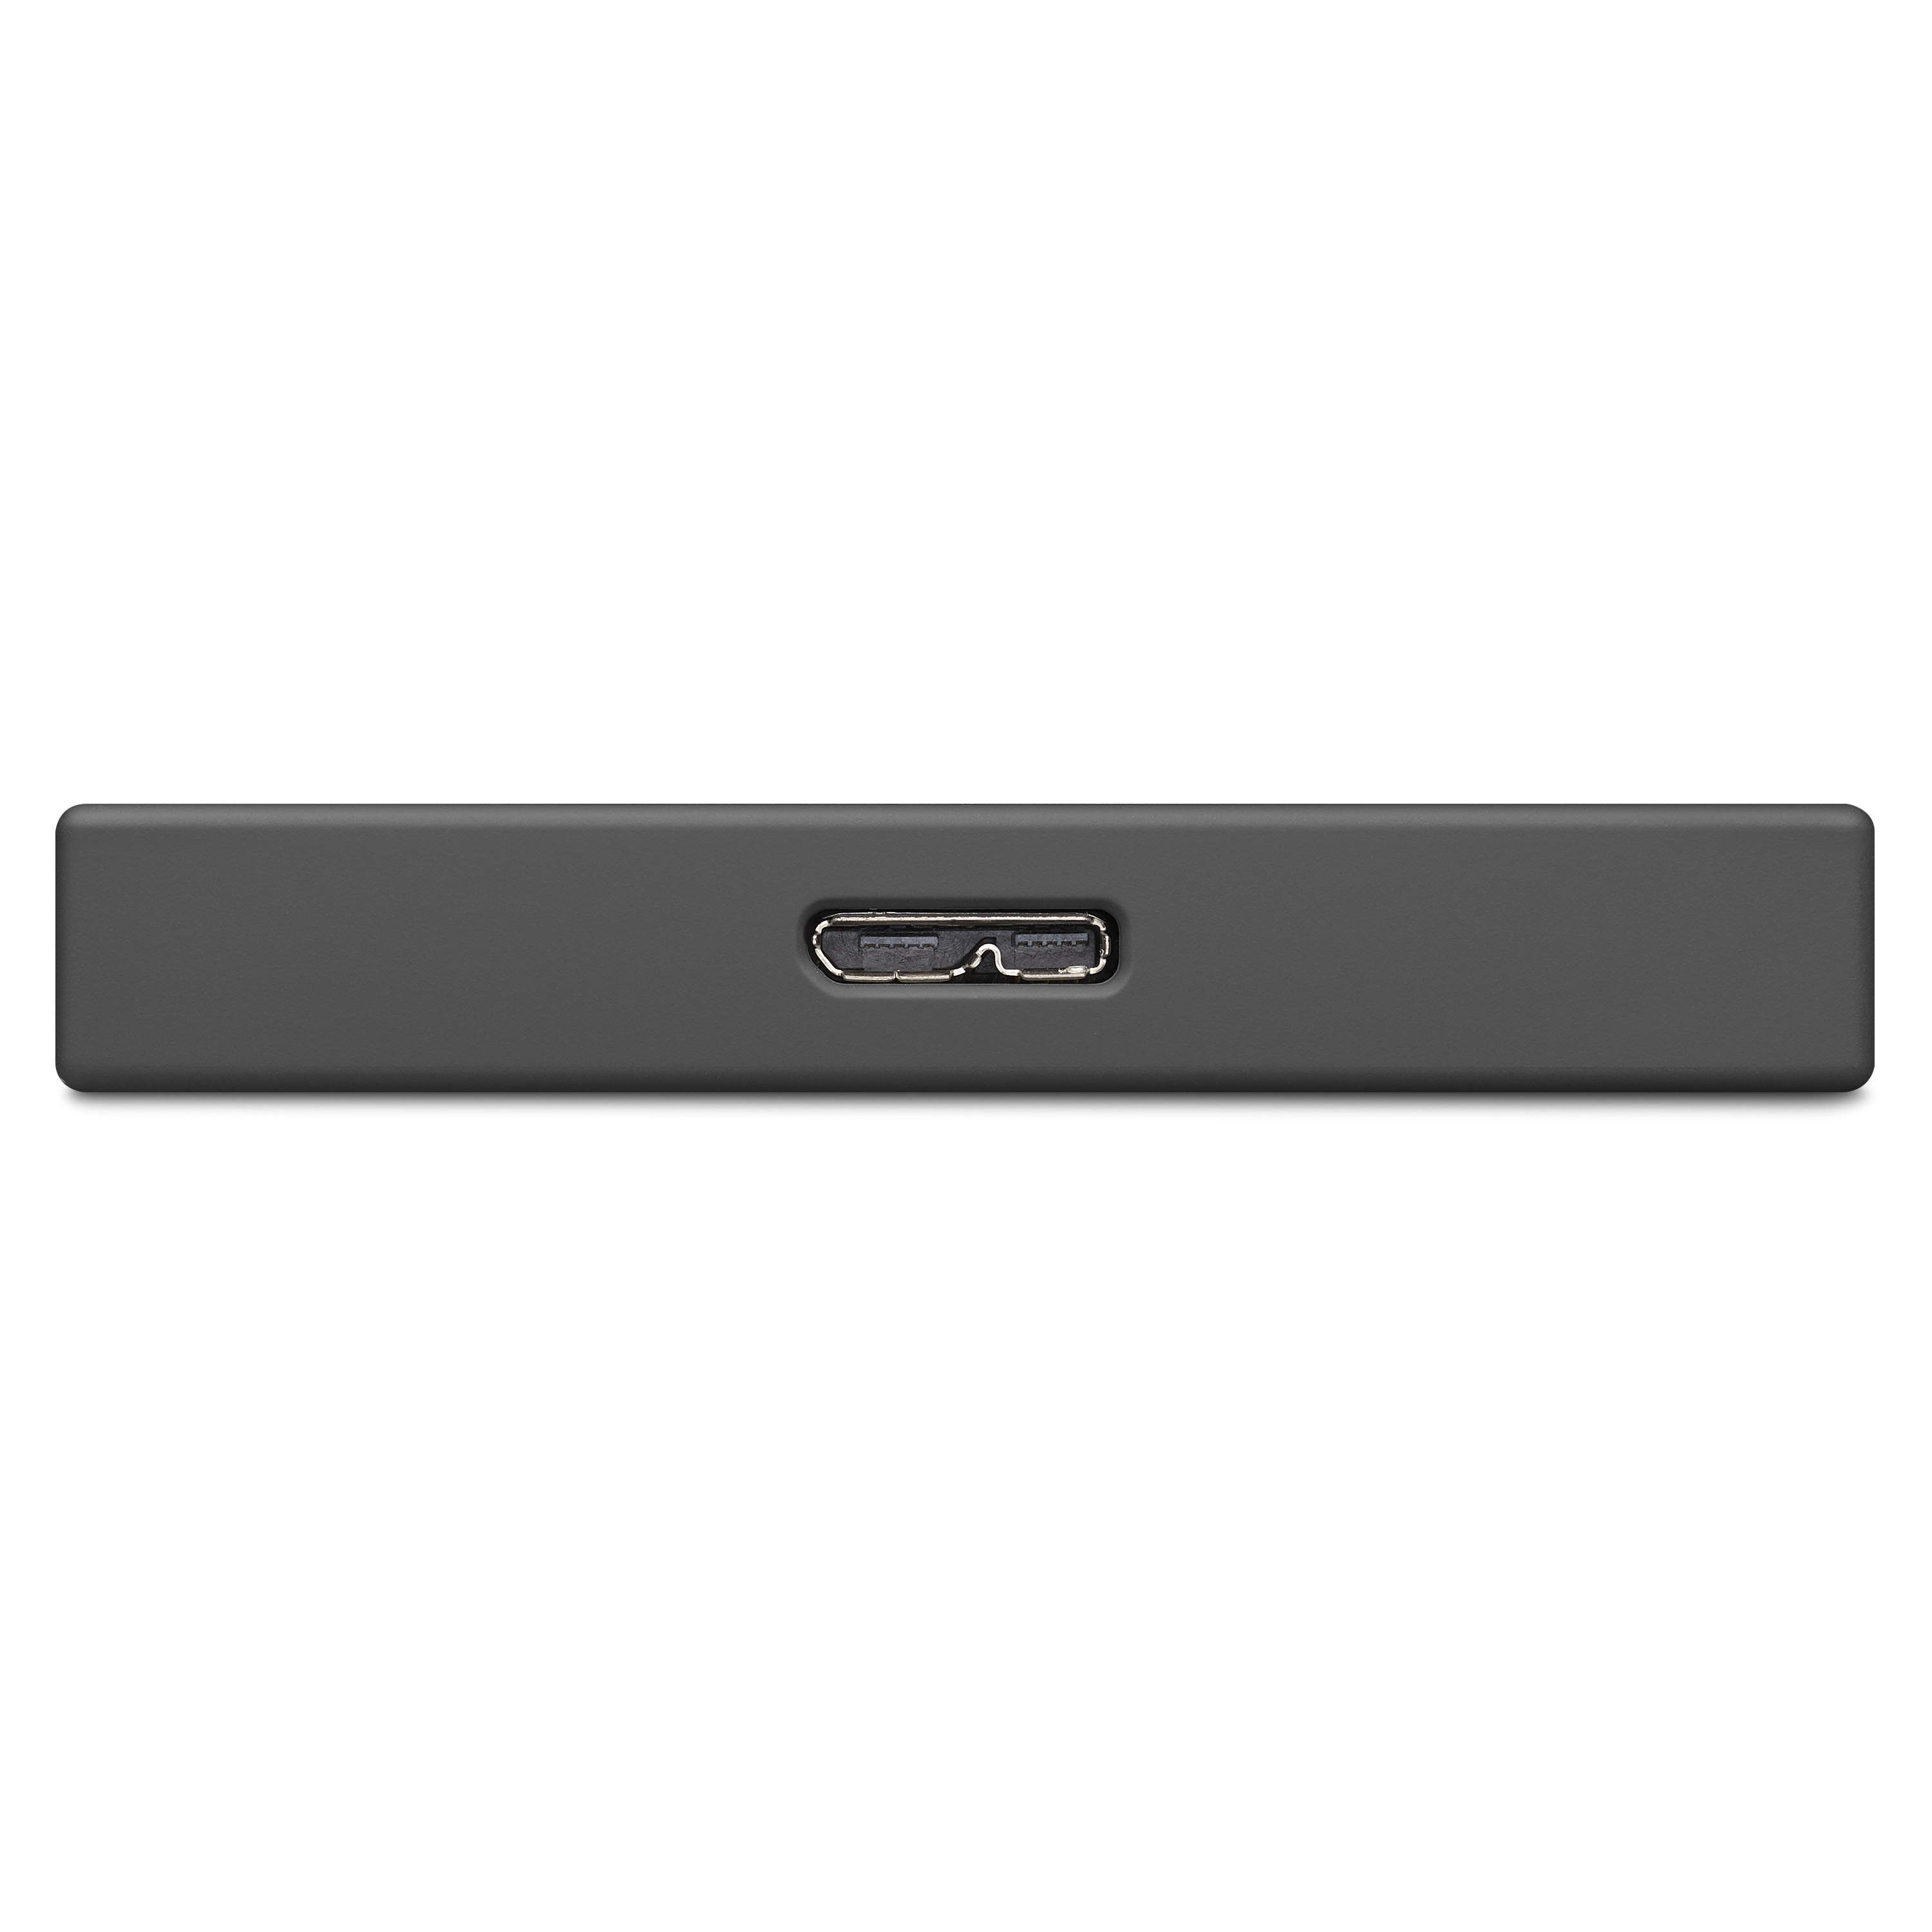 LACIE USB 3.0 2,5 Drive extern, Zoll, Festplatte, 4 HDD, Silber/Schwarz TB